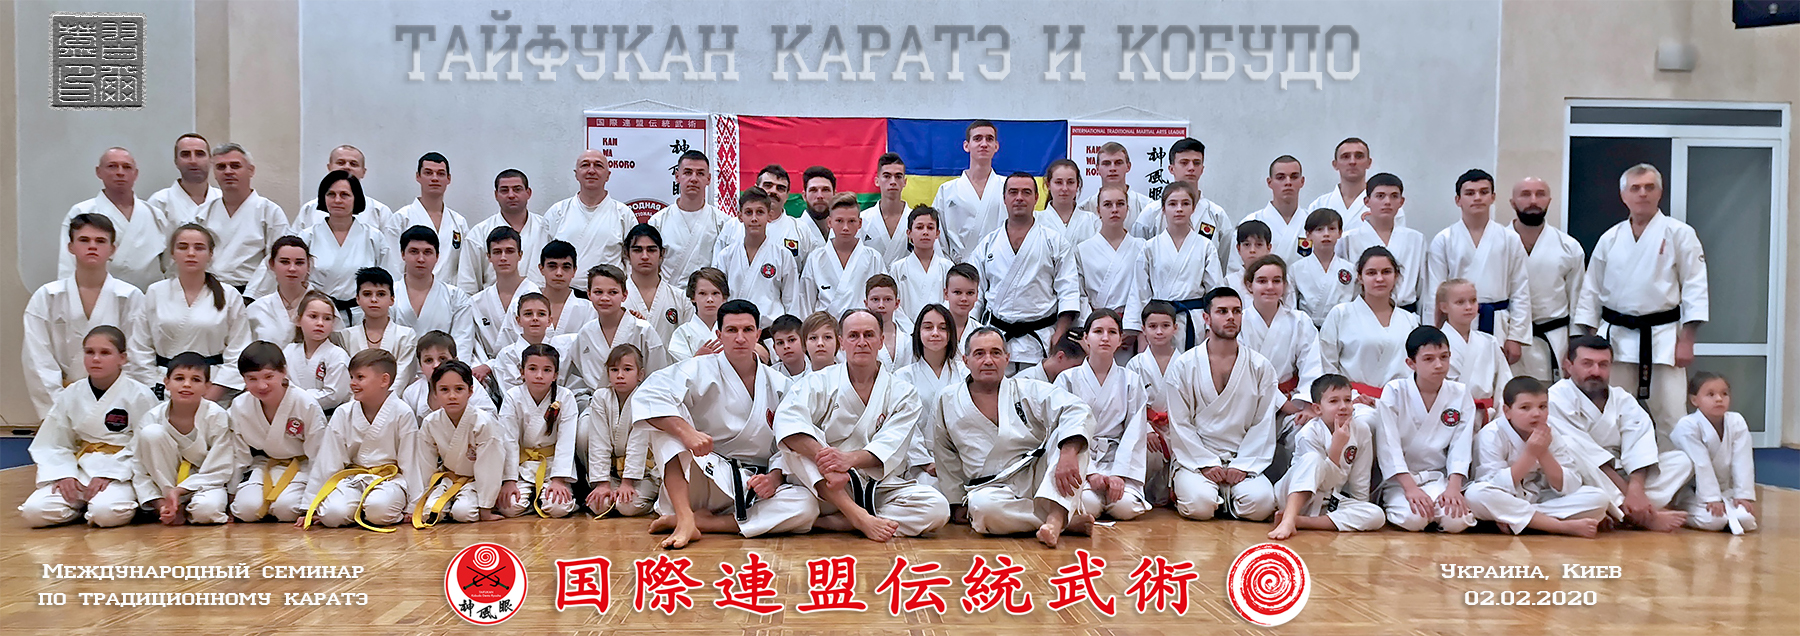 1-й Международный семинар по традиционному каратэ Тайфукан(Киев, 2 февраля 2020г.)